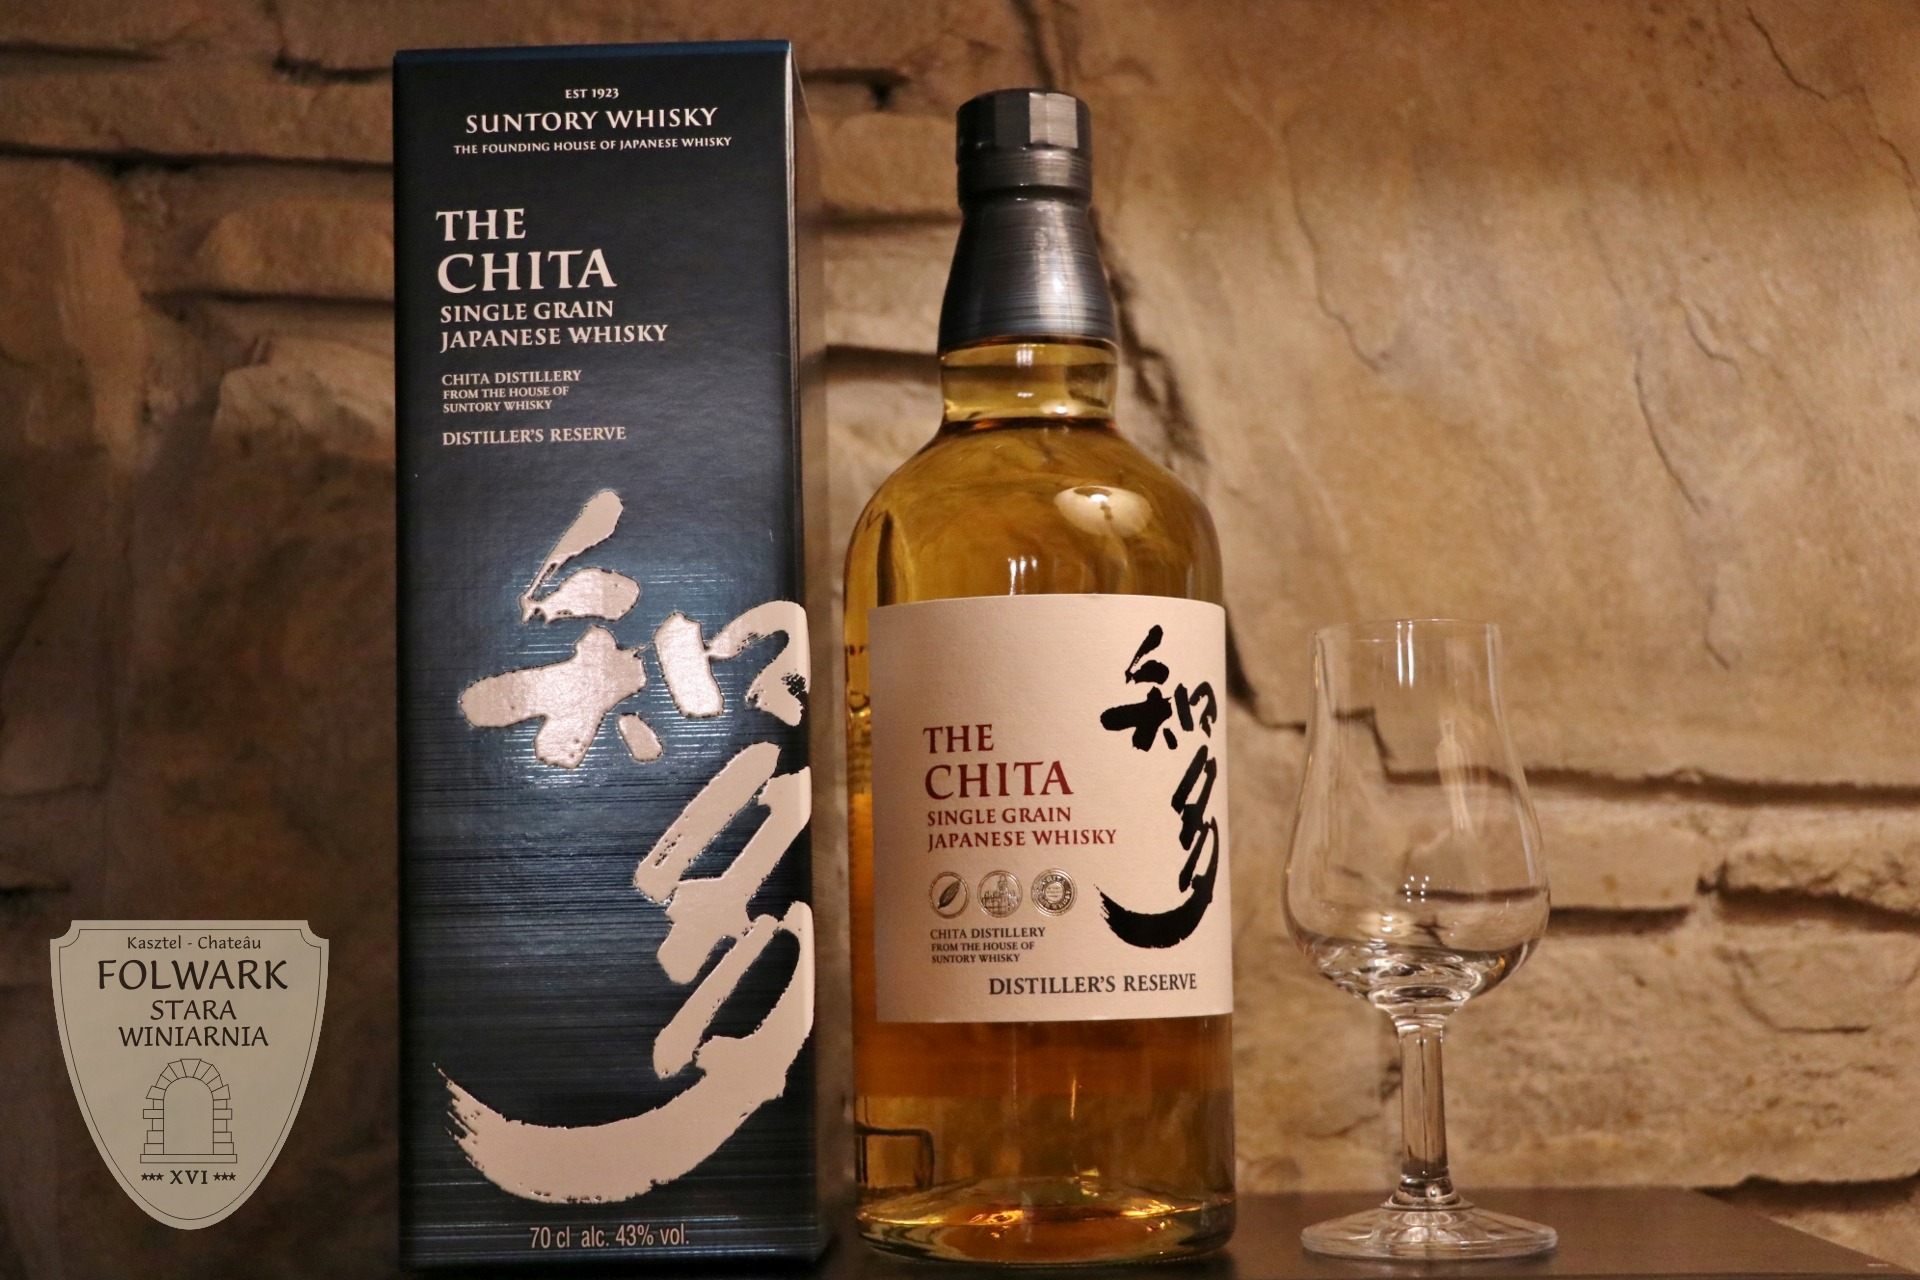 The Chita Single Grain Japanese Whisky